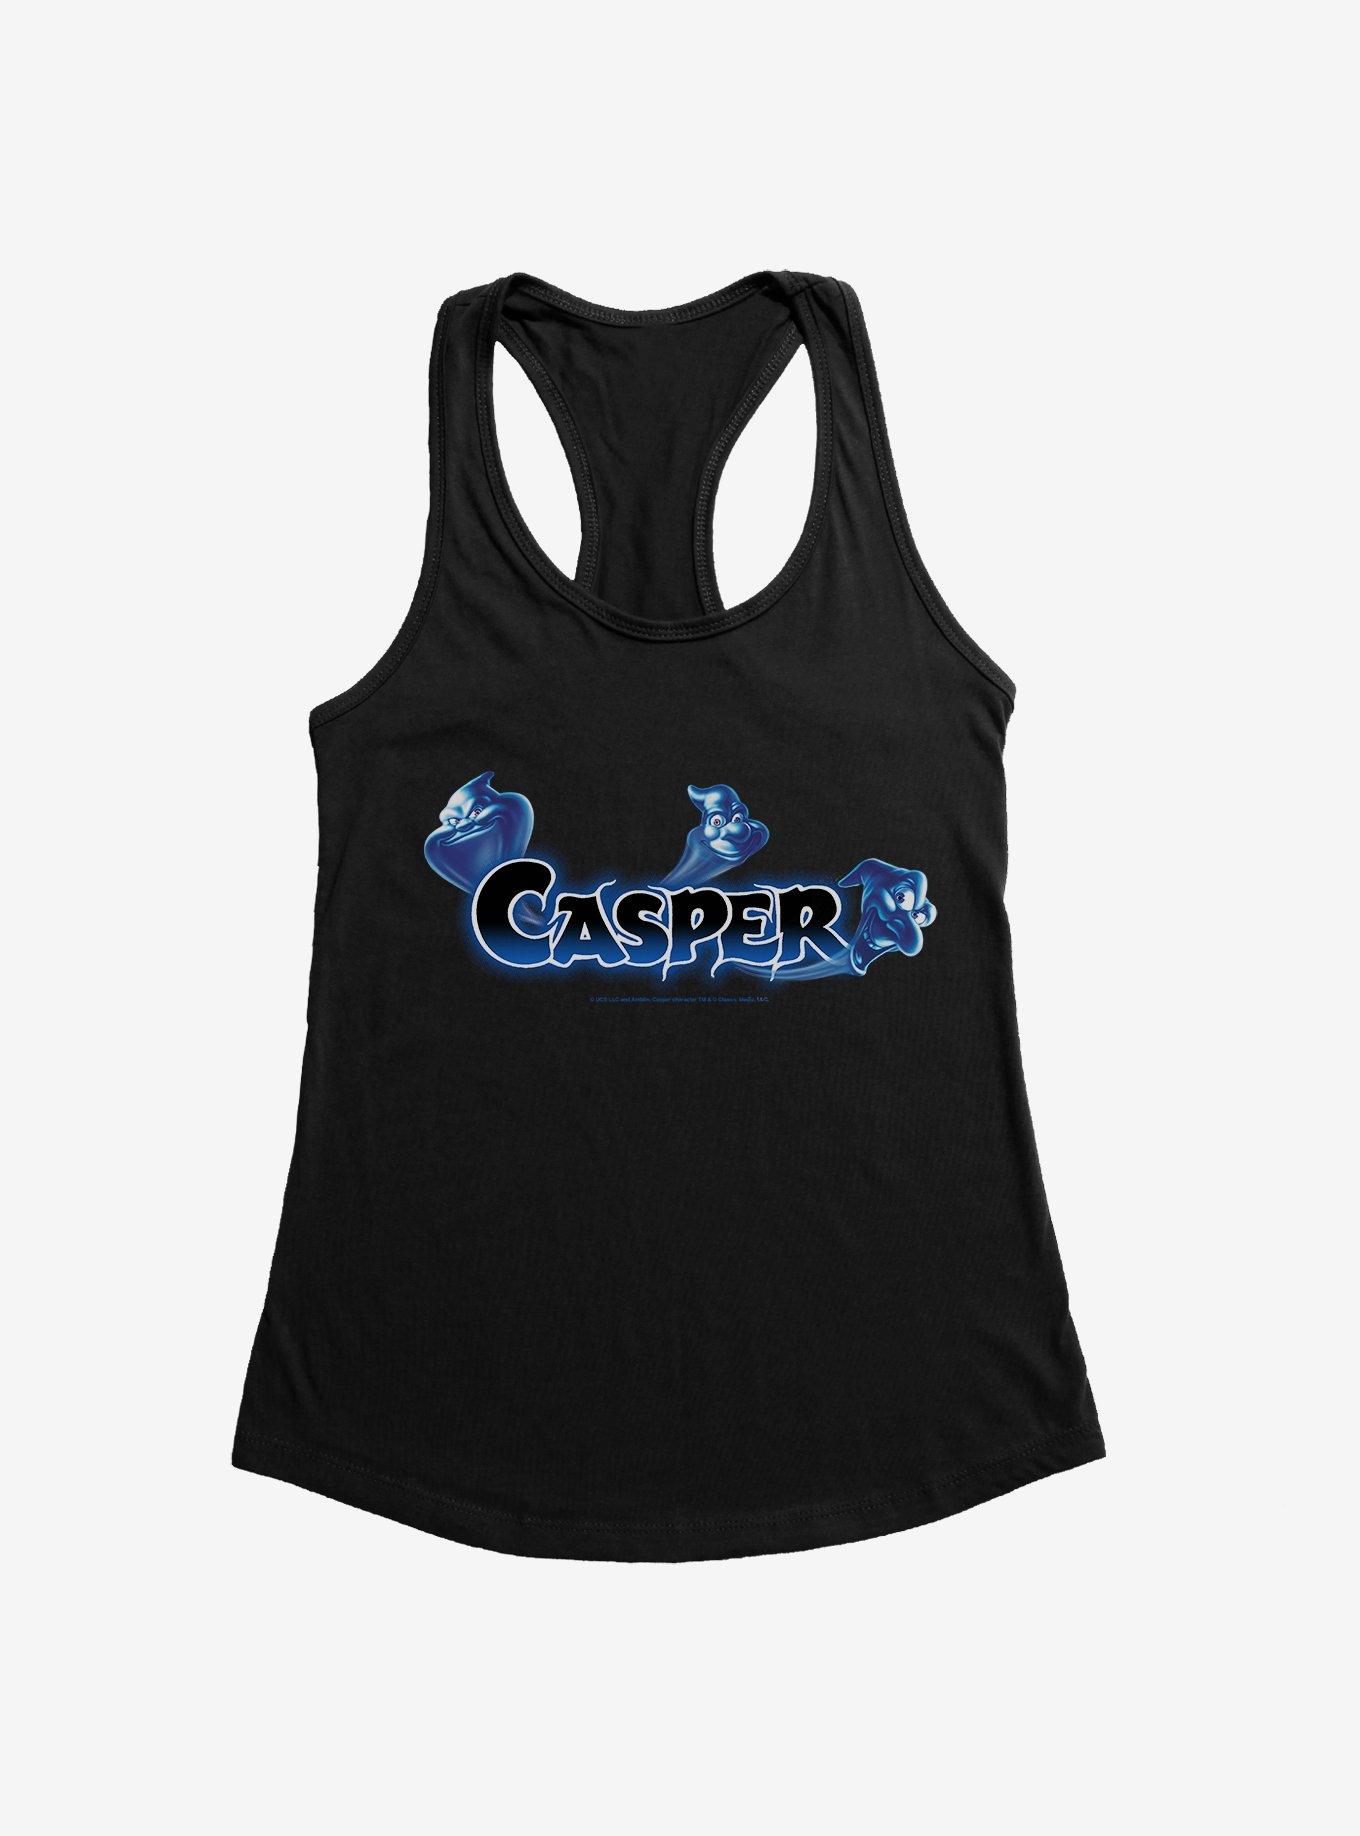 Casper Fatso, Stinky & Stretch Logo Girls Tank, BLACK, hi-res